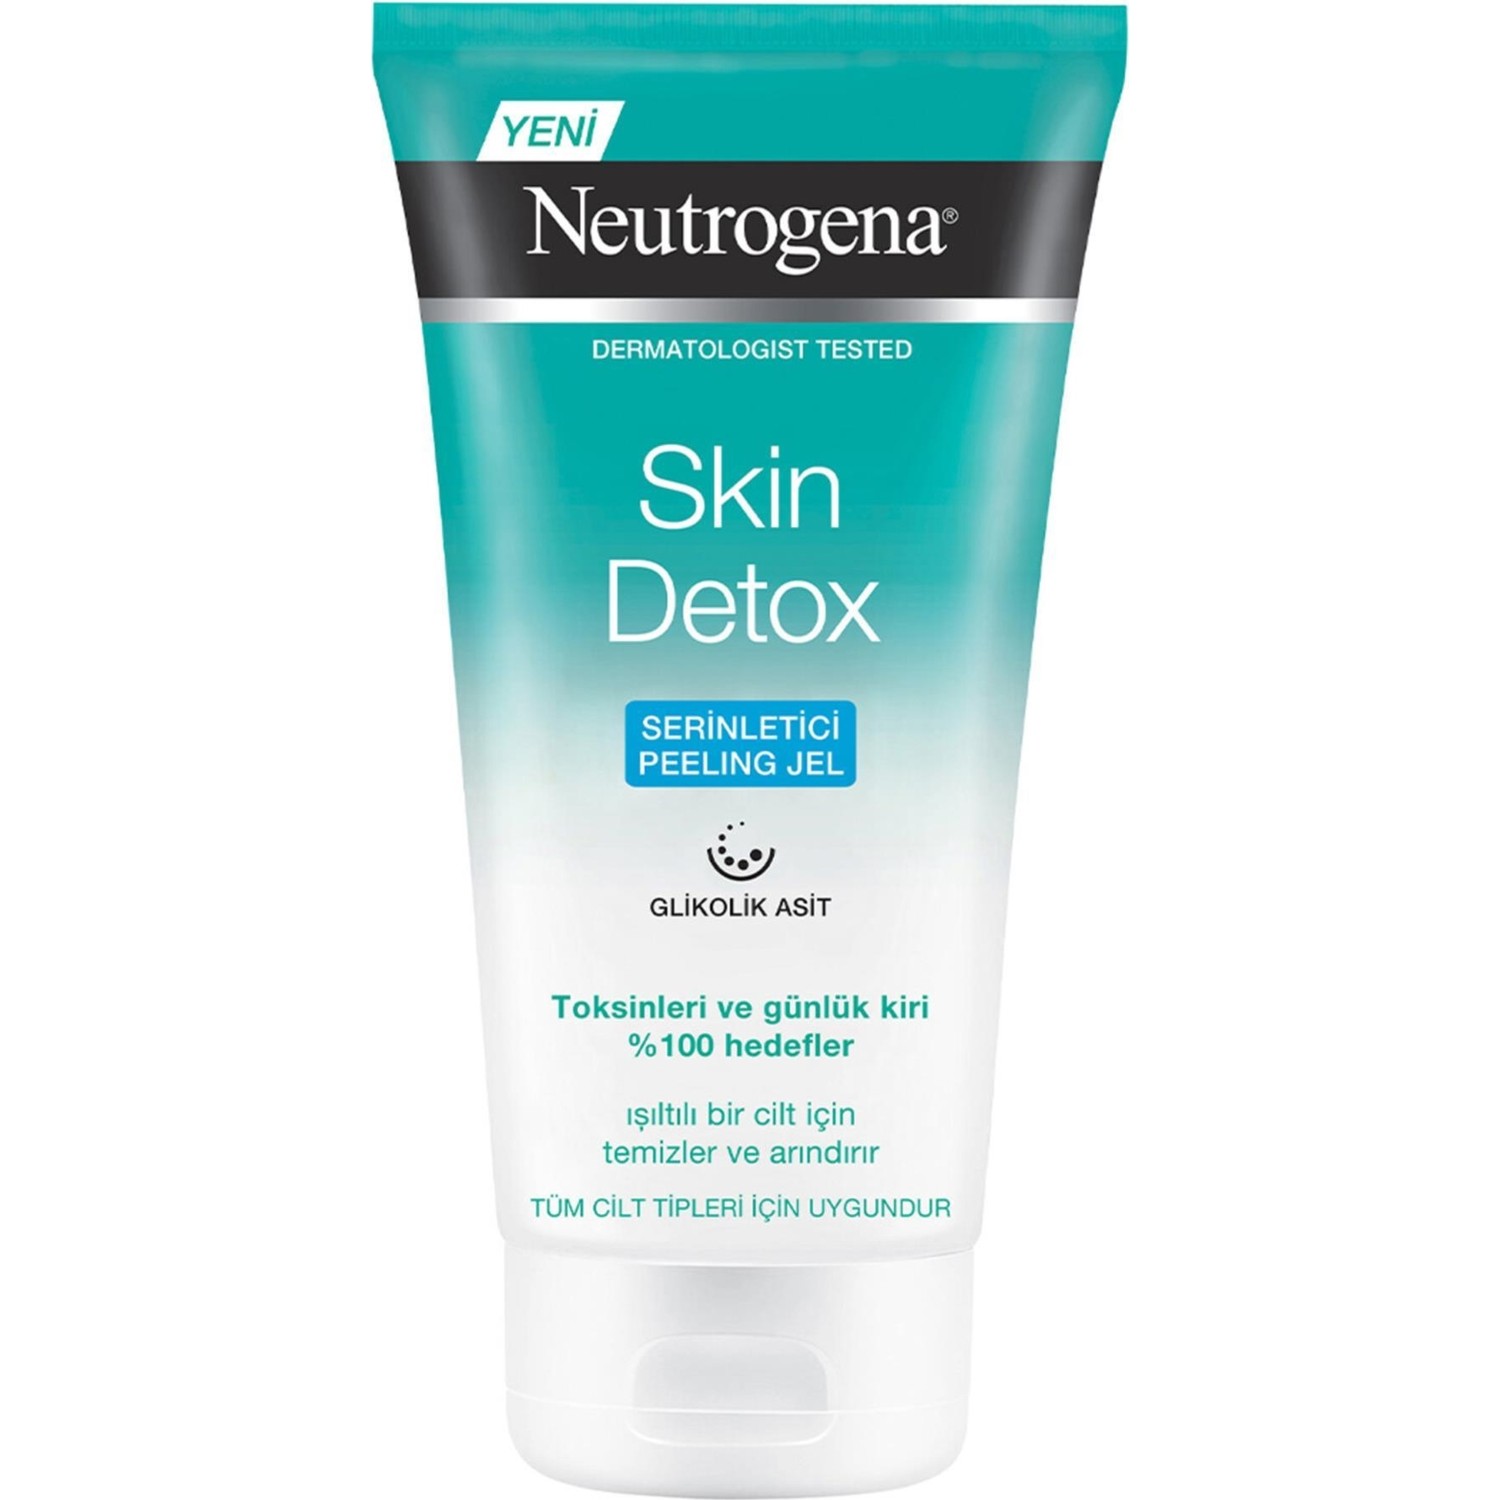 Освежающий пилинг-гель Neutrogena Skin Detox, 150 мл маска для лица skin detox mascarilla arcilla purificante detox neutrogena 150 мл